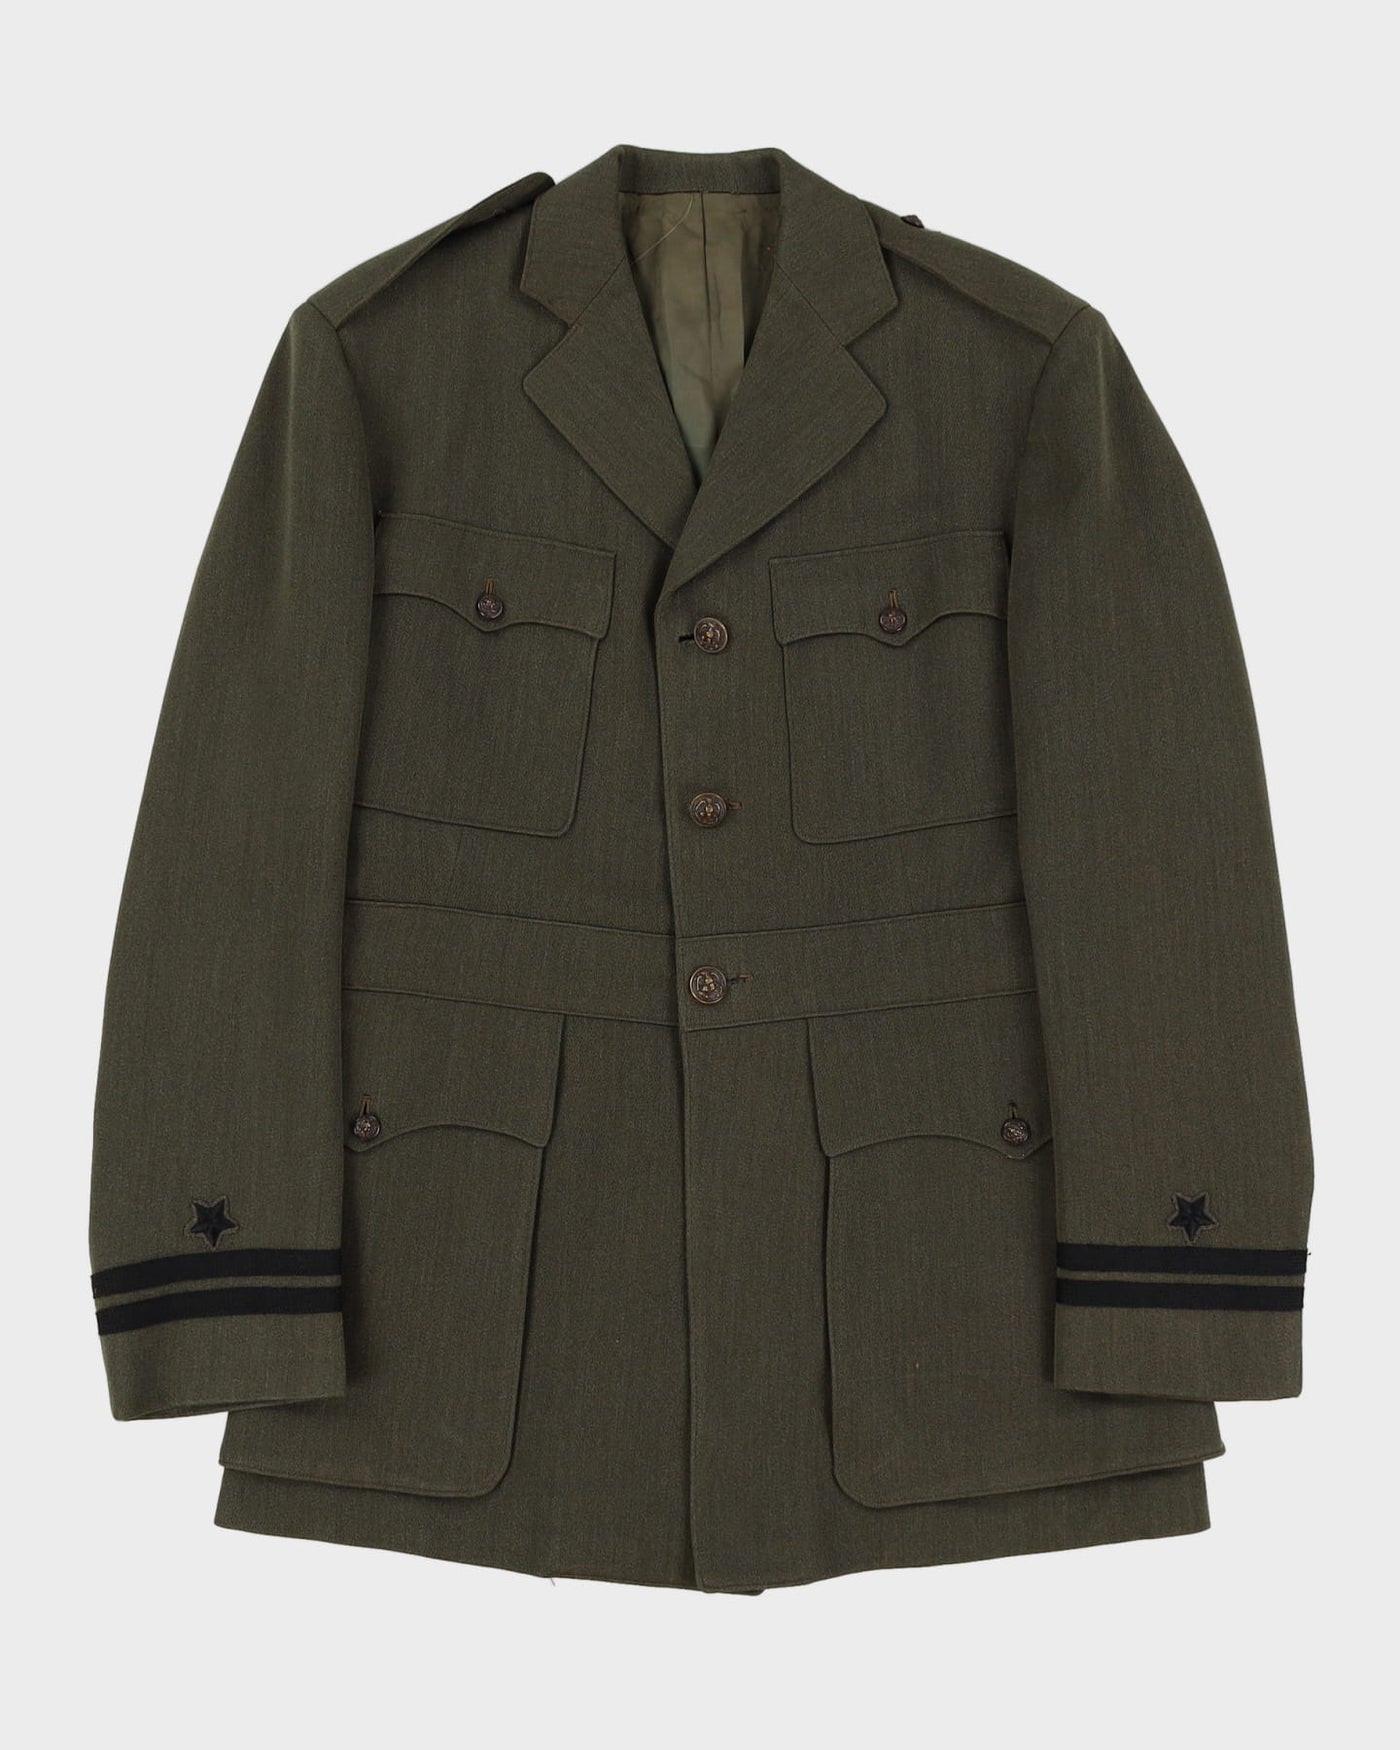 1940s WW2 Vintage US Navy Aviator Green Dress Jacket - Small